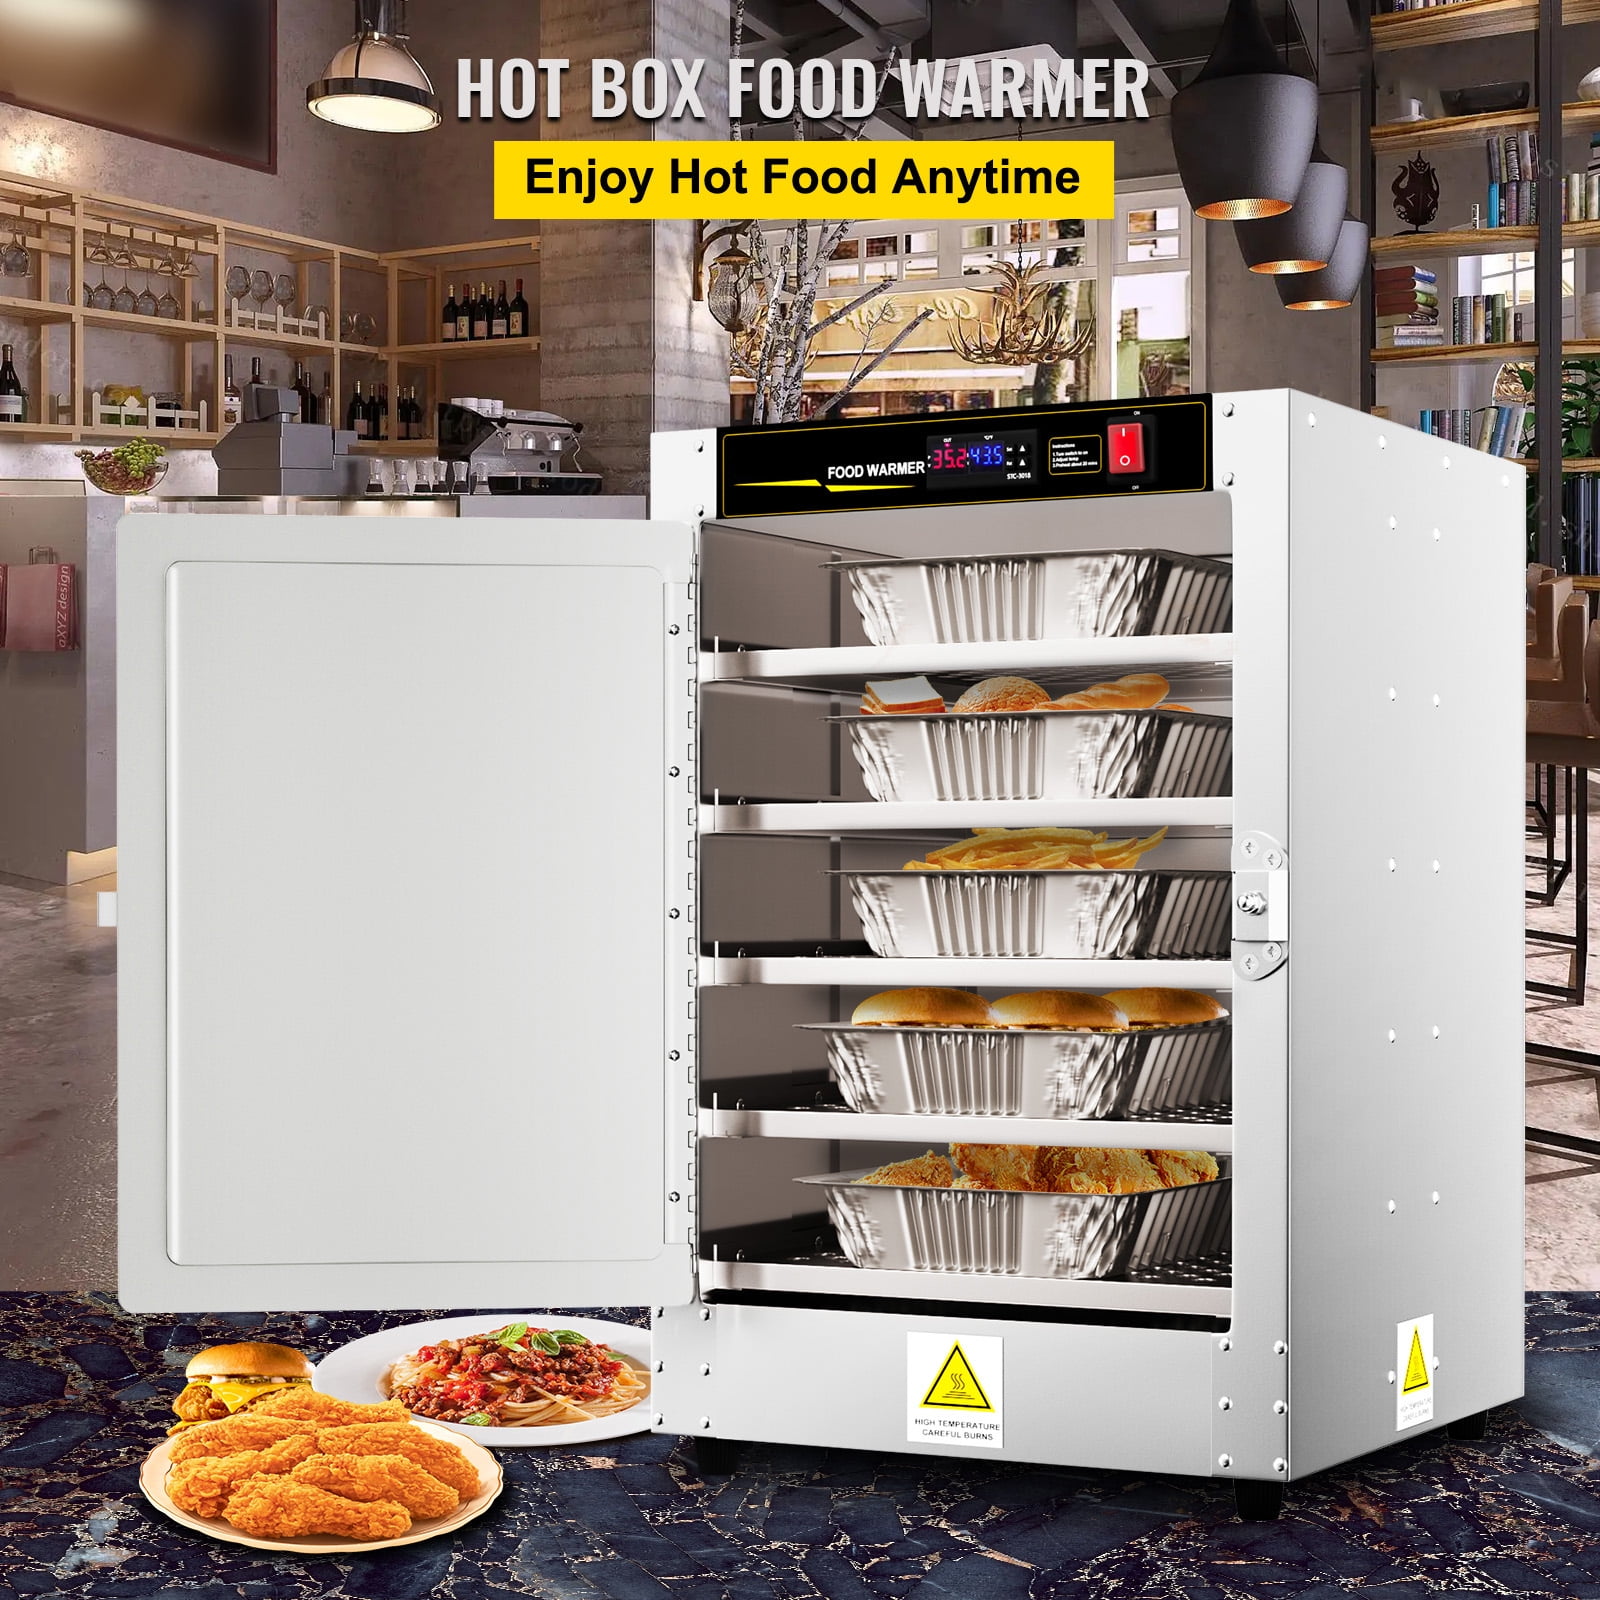 Heatmax 191929 Hot Box Food Warmer, Gray